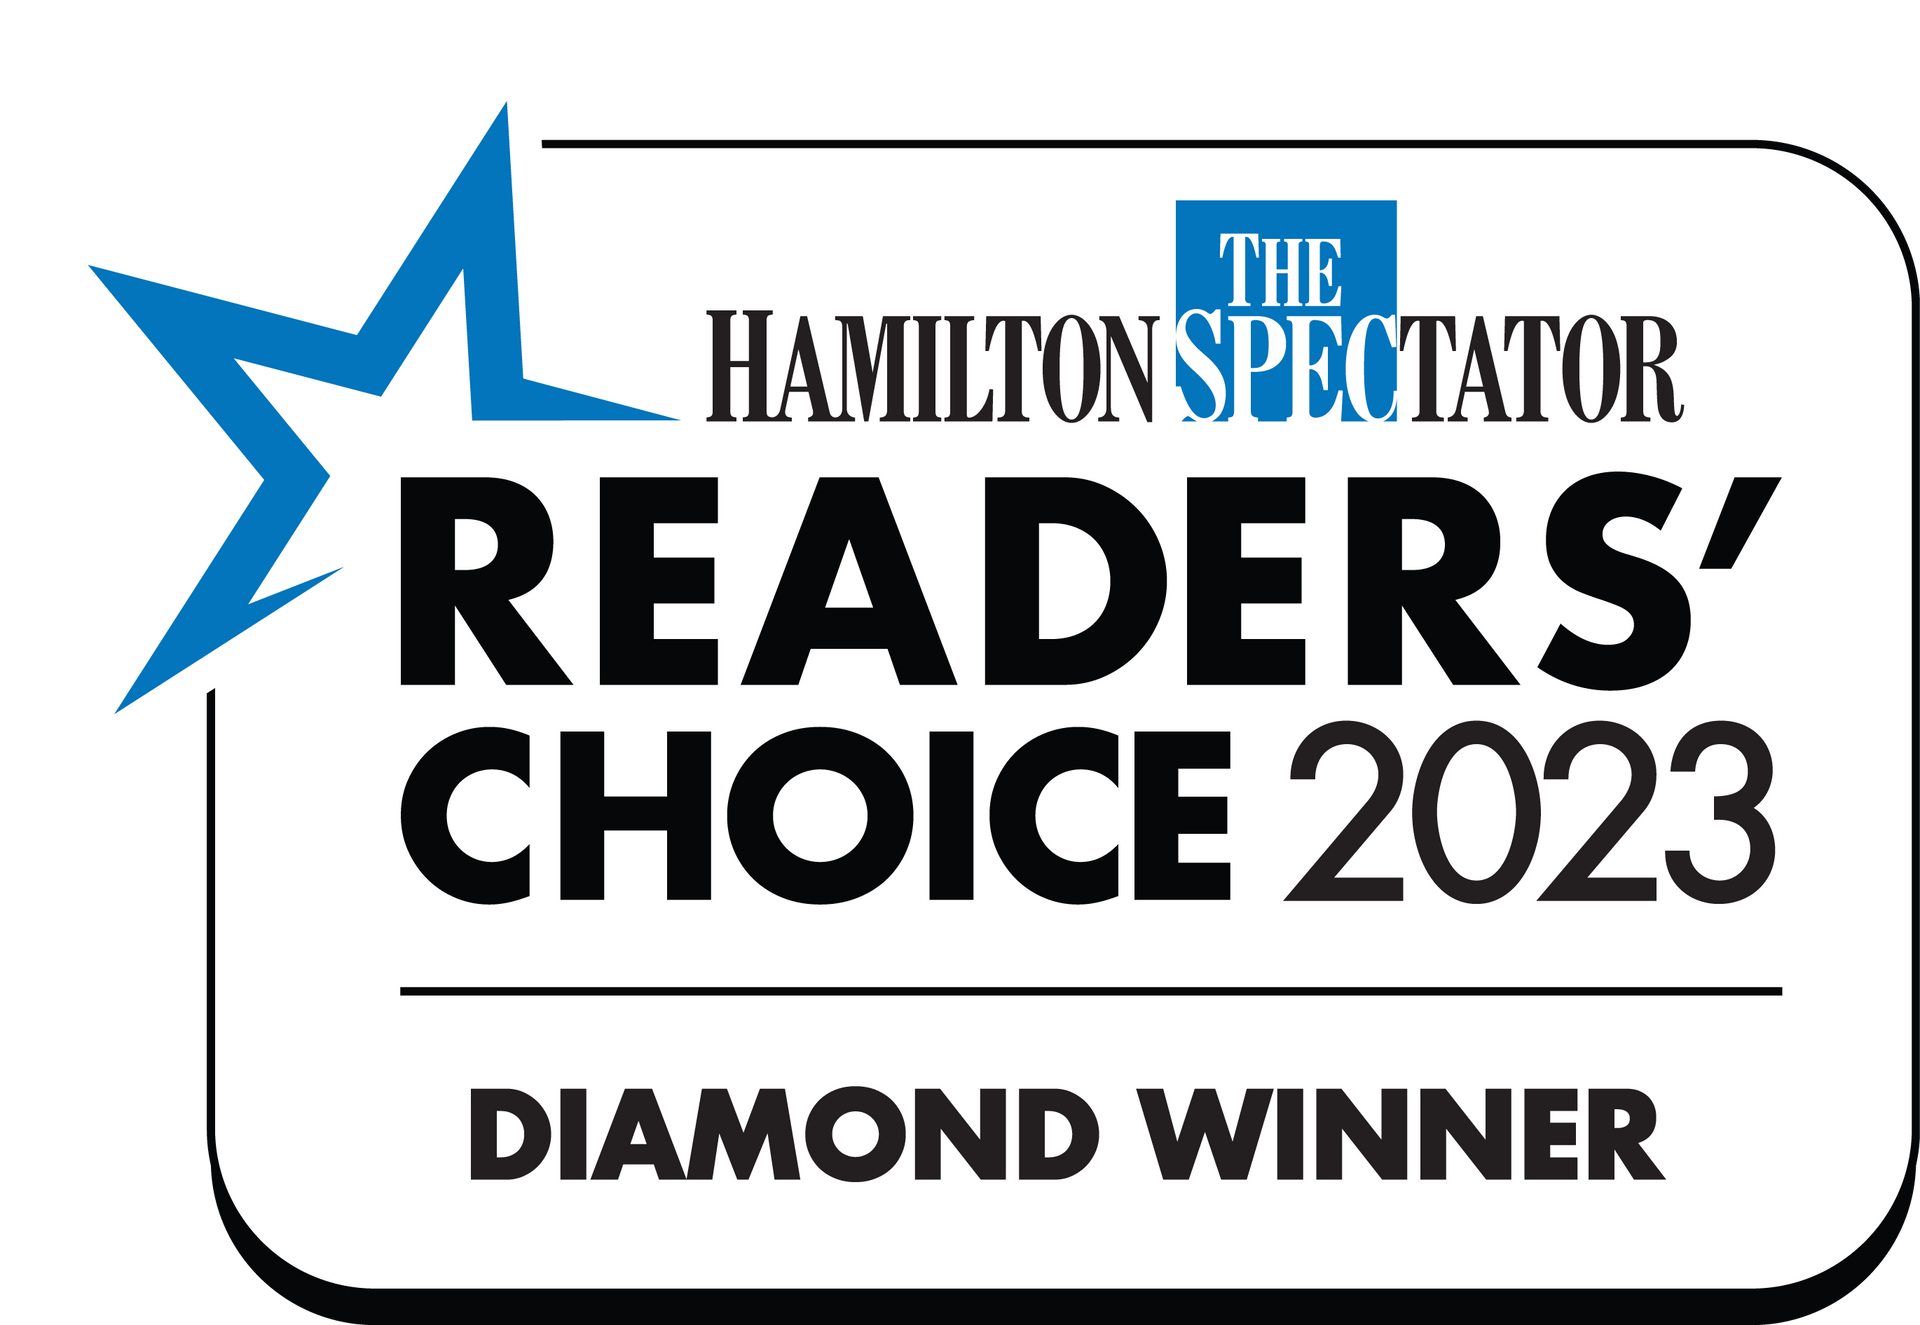 the hamilton spectator readers ' choice 2023 diamond winner logo